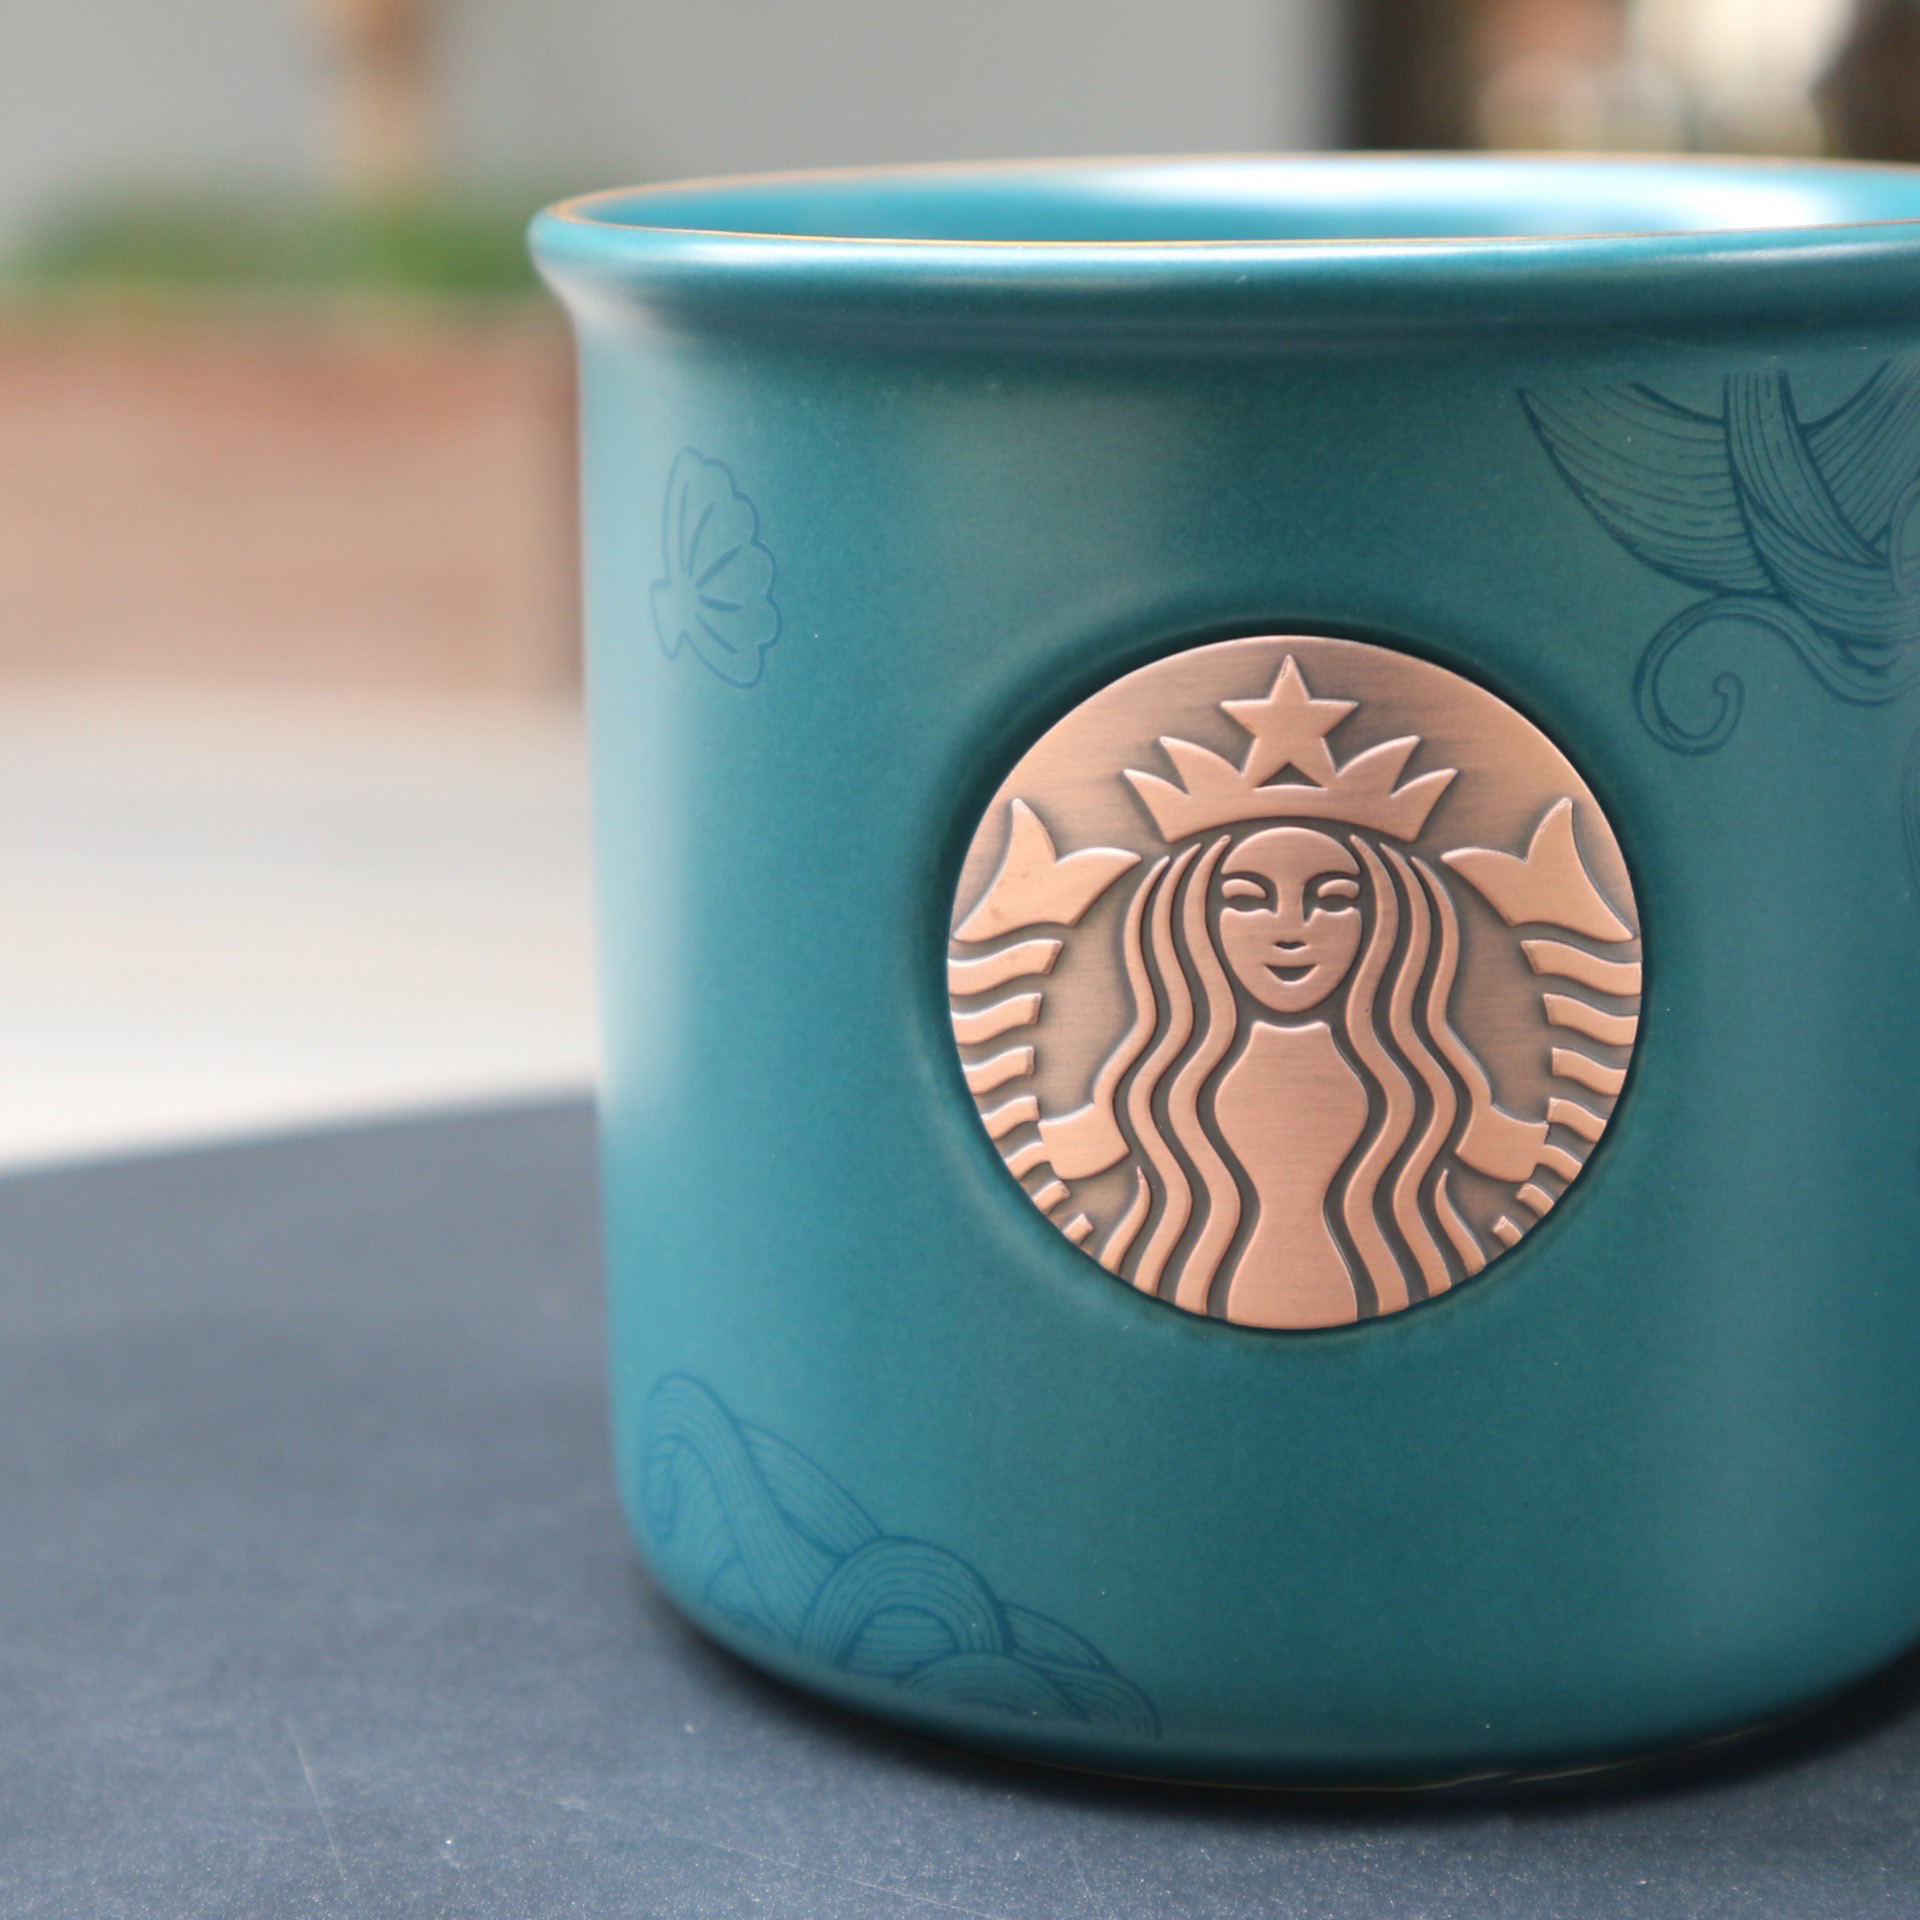 Starbucks 2020 Blue Mermaid แก้วเซรามิคเคลือบทองแดงตราแก้วความจุขนาดใหญ่ถ้วยกาแฟทนความร้อน